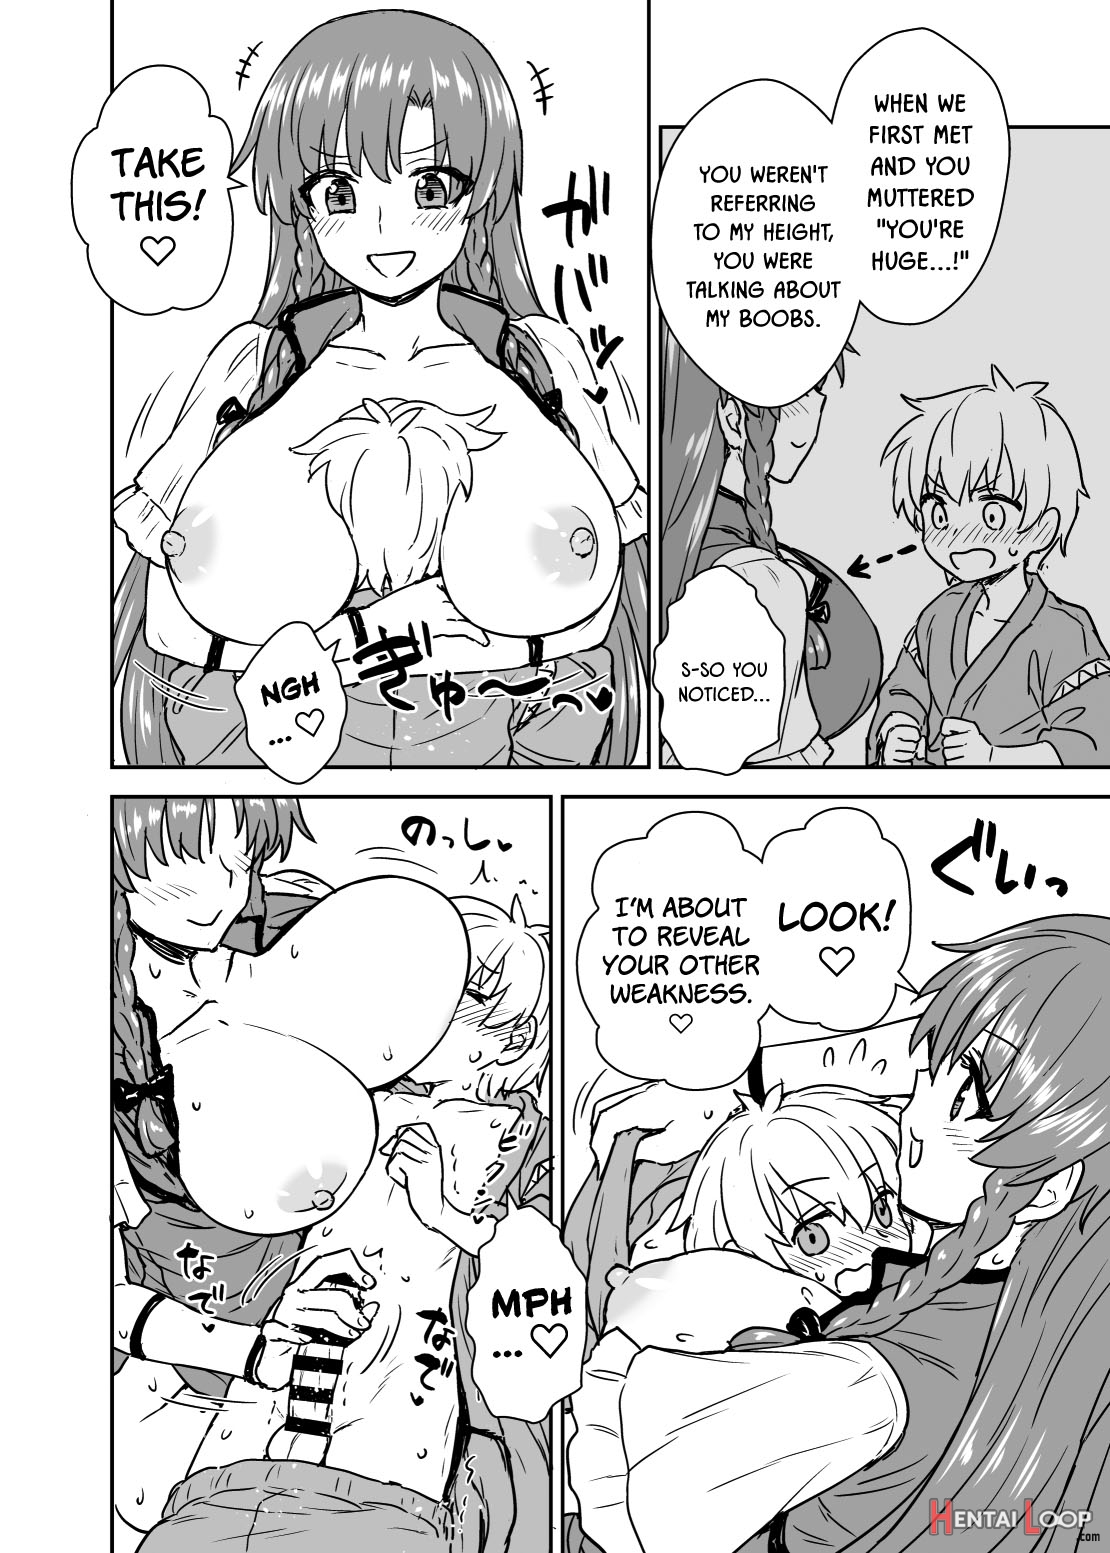 Misuzu-san Appears! page 7